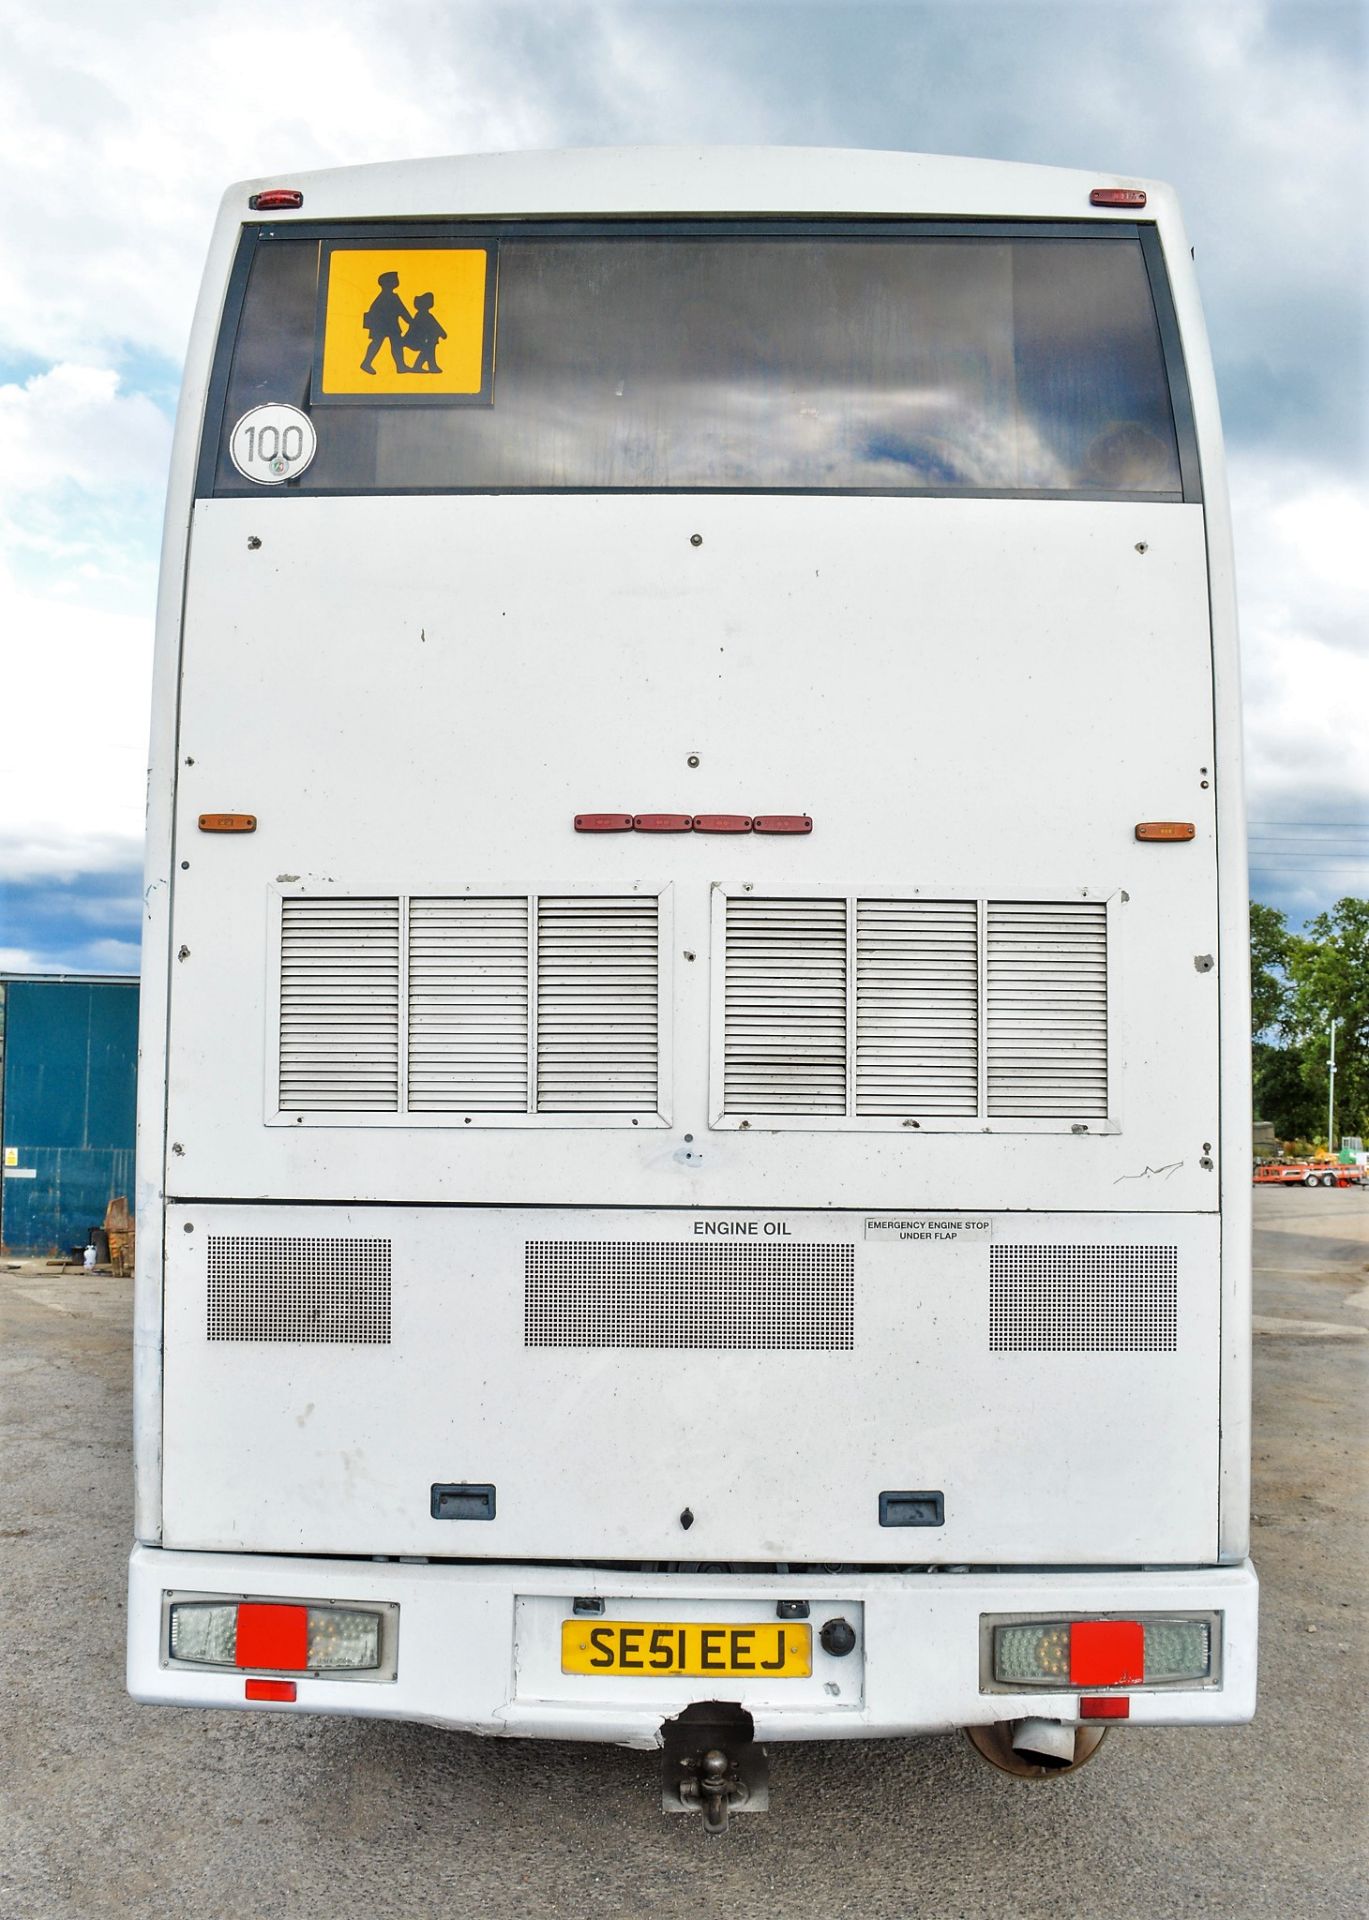 VDL Jonckheere 65 seat double deck luxury coach Registration Number: SE51 EEJ Date of - Image 6 of 23